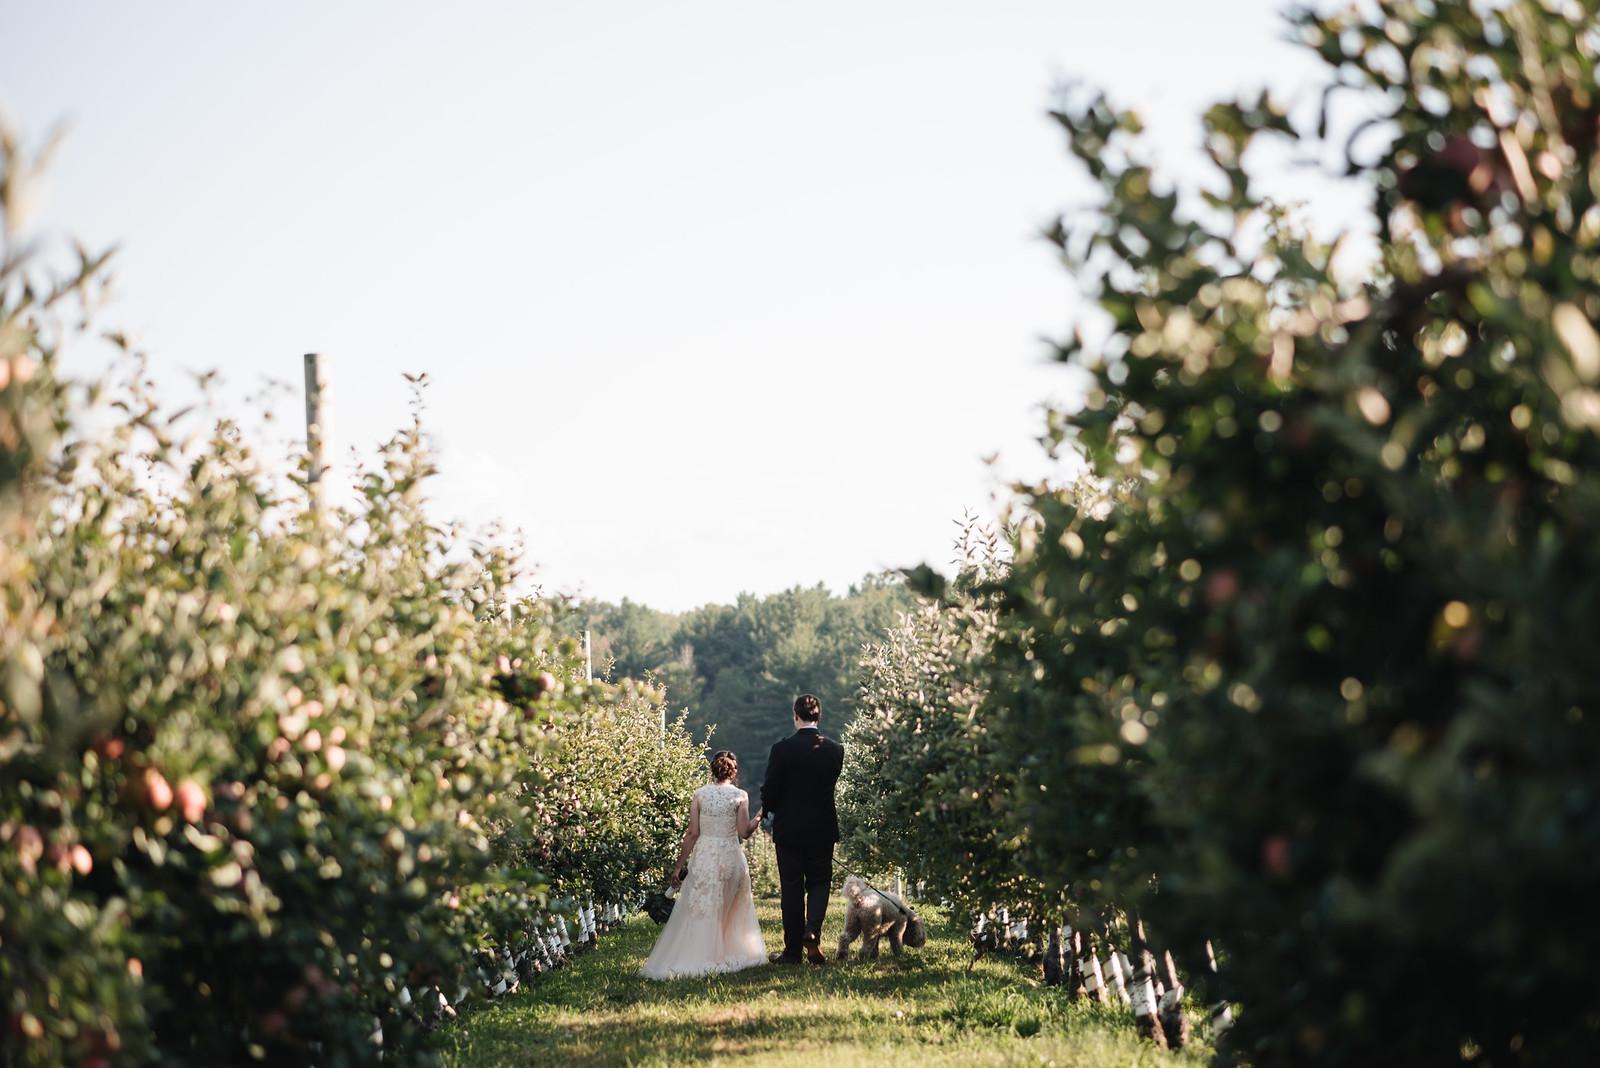 New England Apple Orchard Wedding Portraits on juliettelauraphotography.blogspot.com